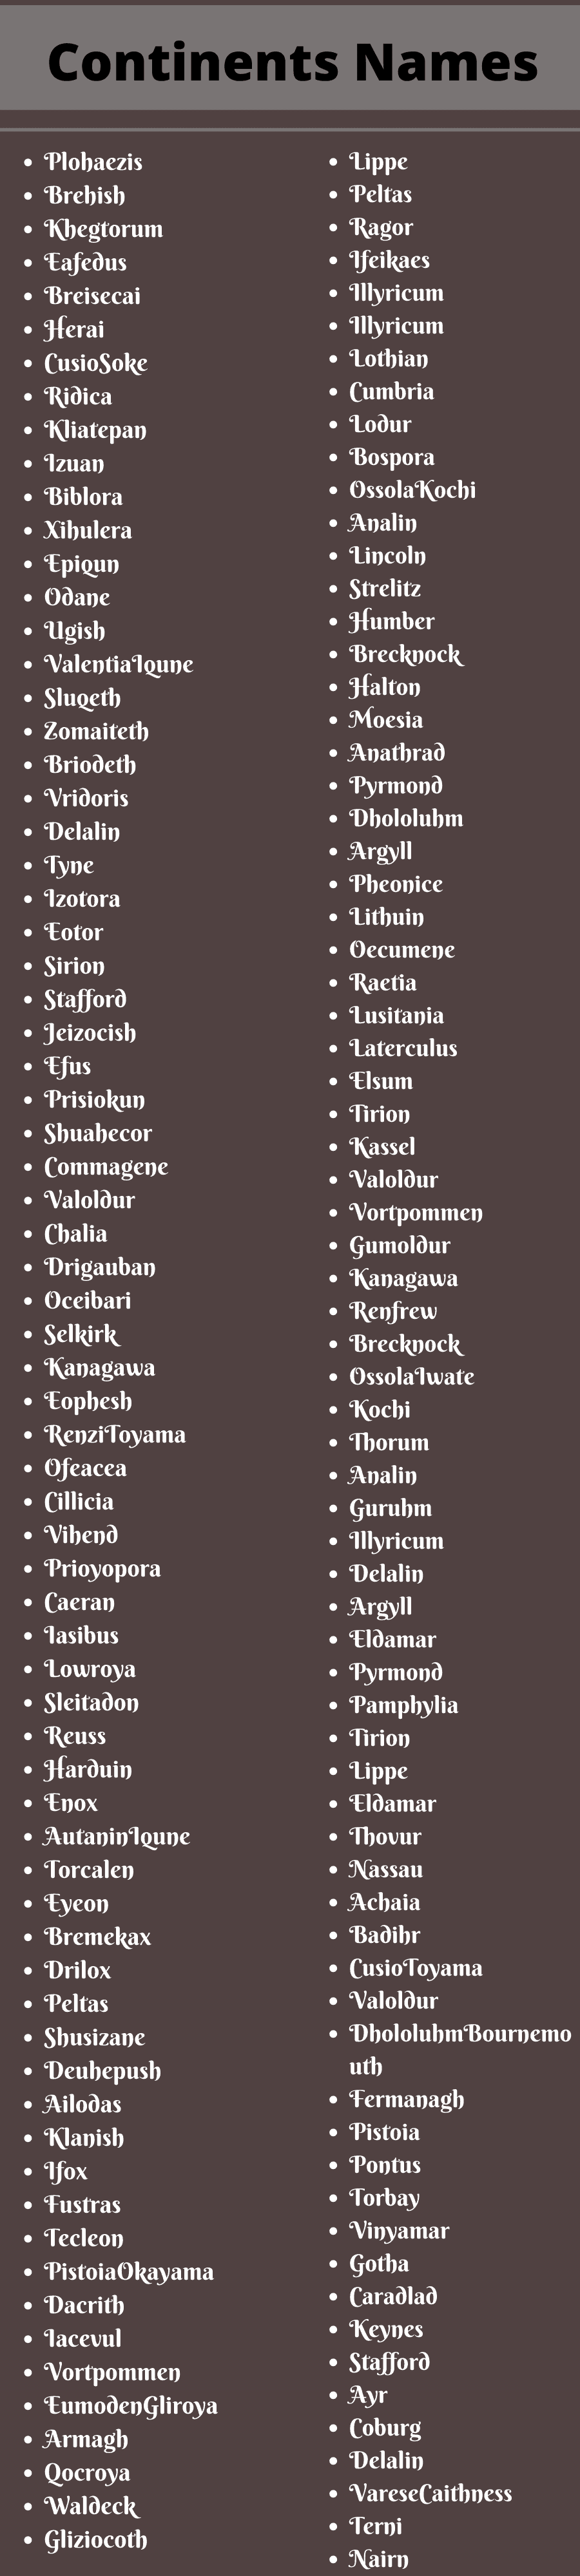 Continent names